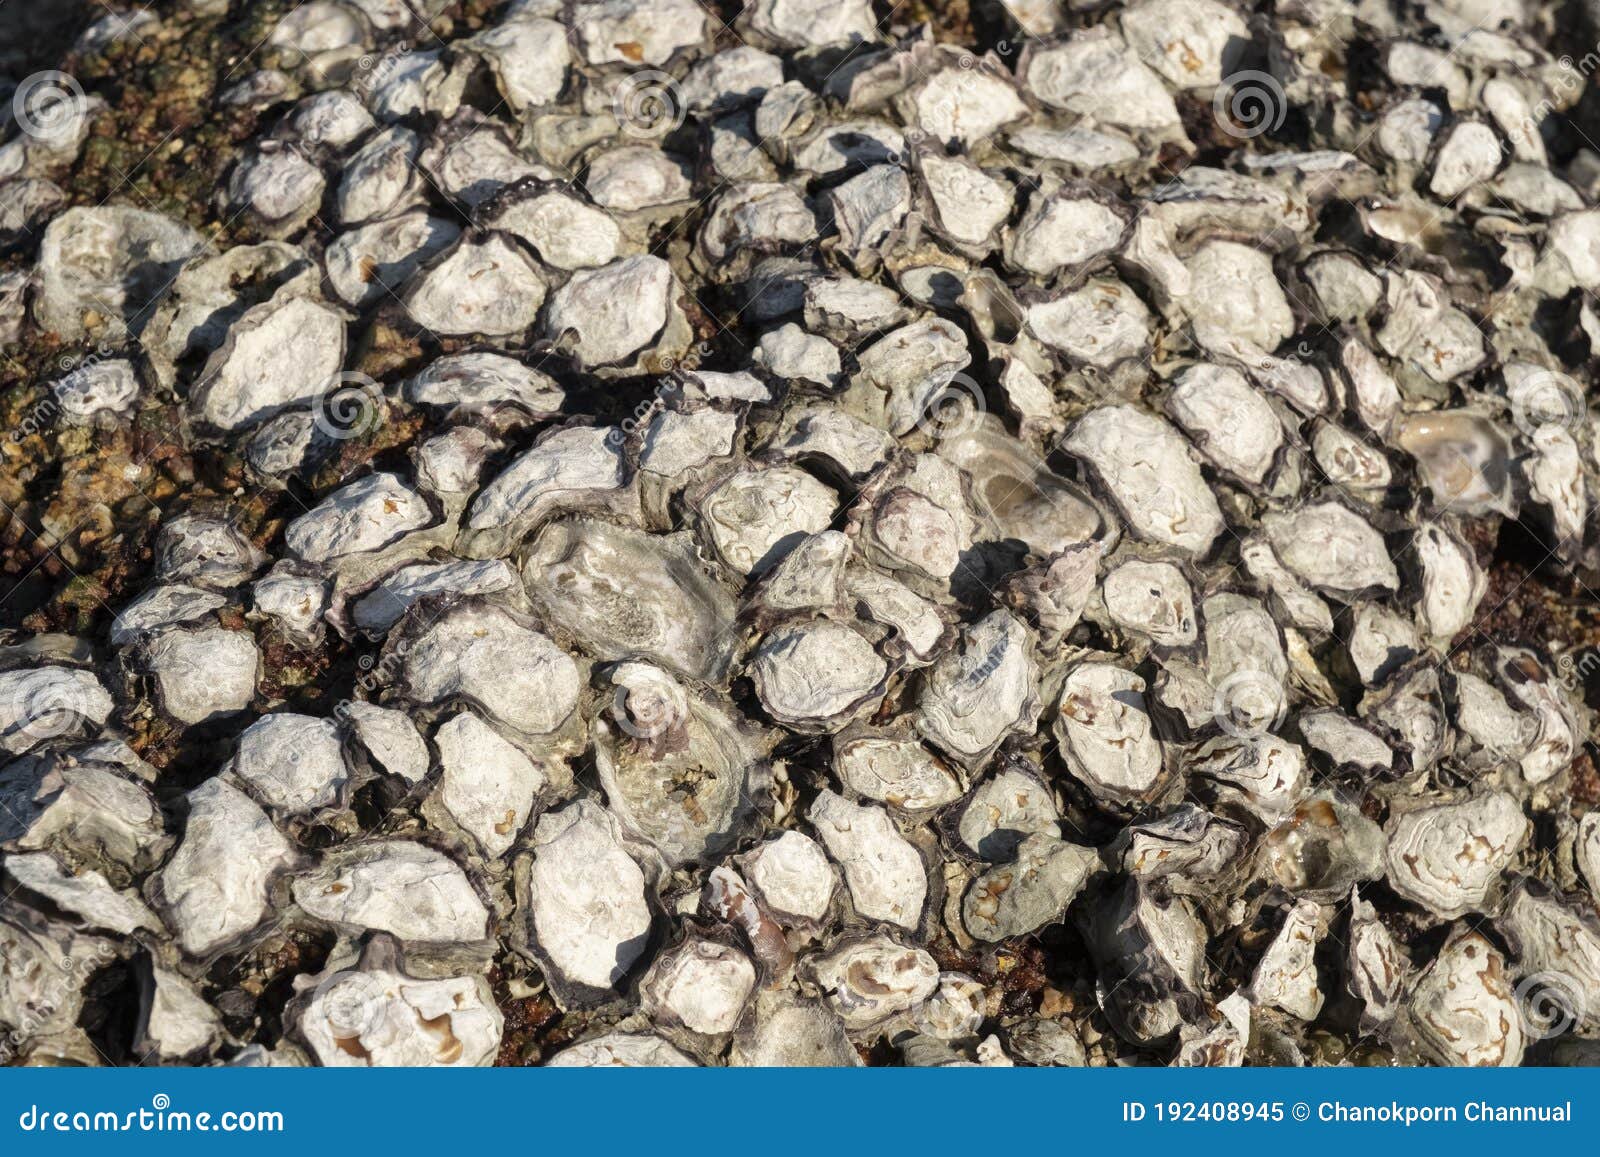 Roughly Fresh Oysters Shell On Beach Near Sea Or Ocean ...